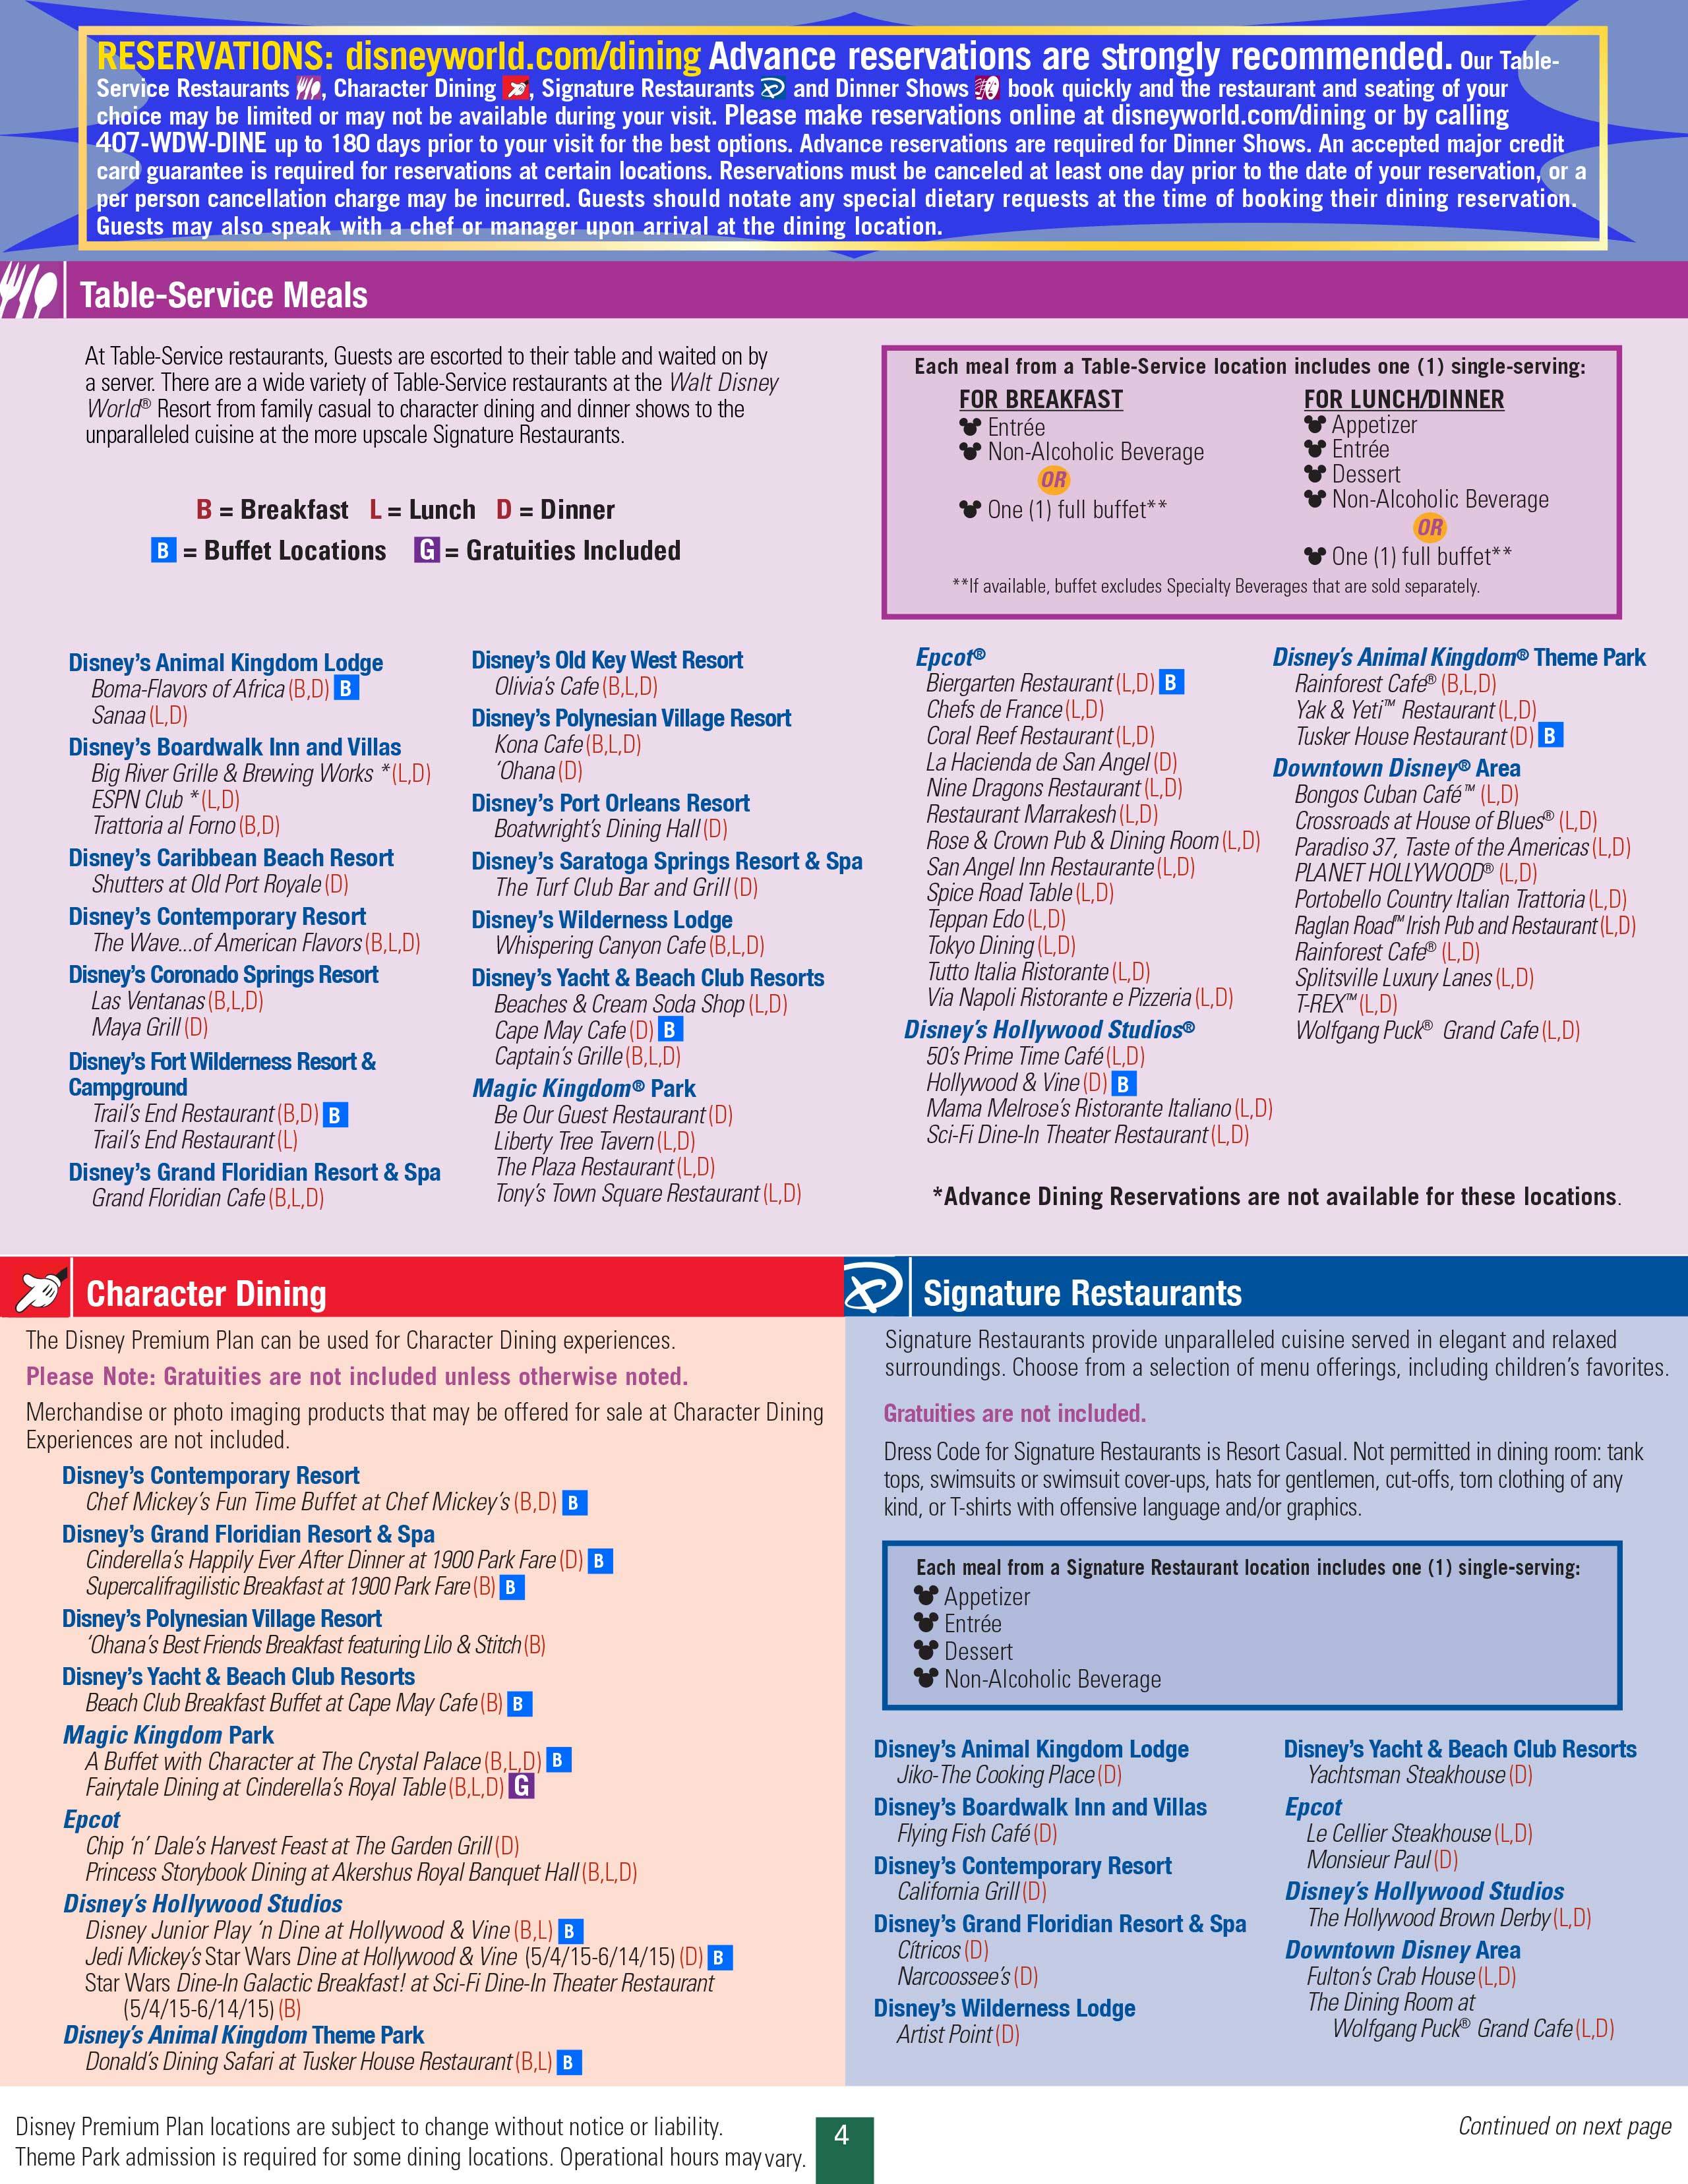 2015 Disney Premium Plan brochure - Page 4